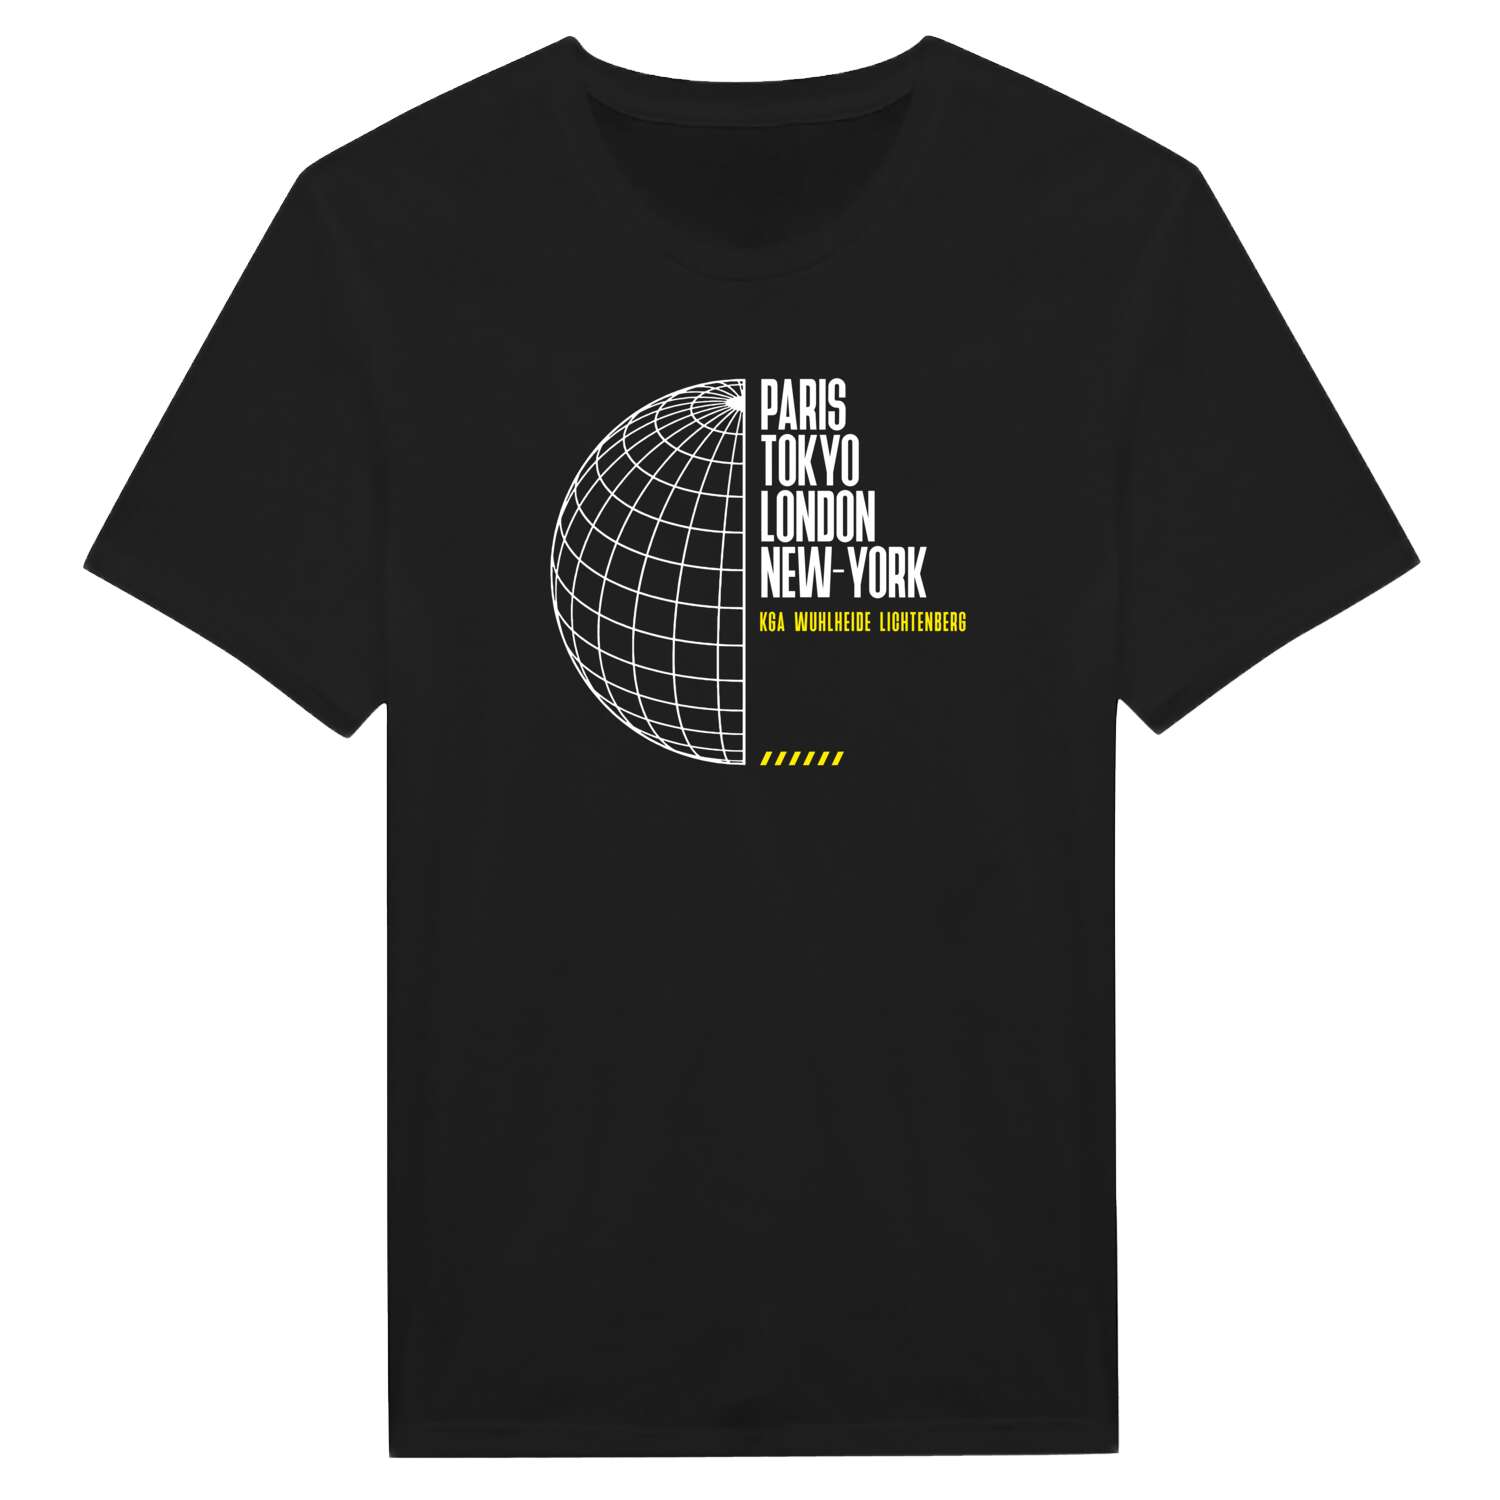 KGA Wuhlheide Lichtenberg T-Shirt »Paris Tokyo London«